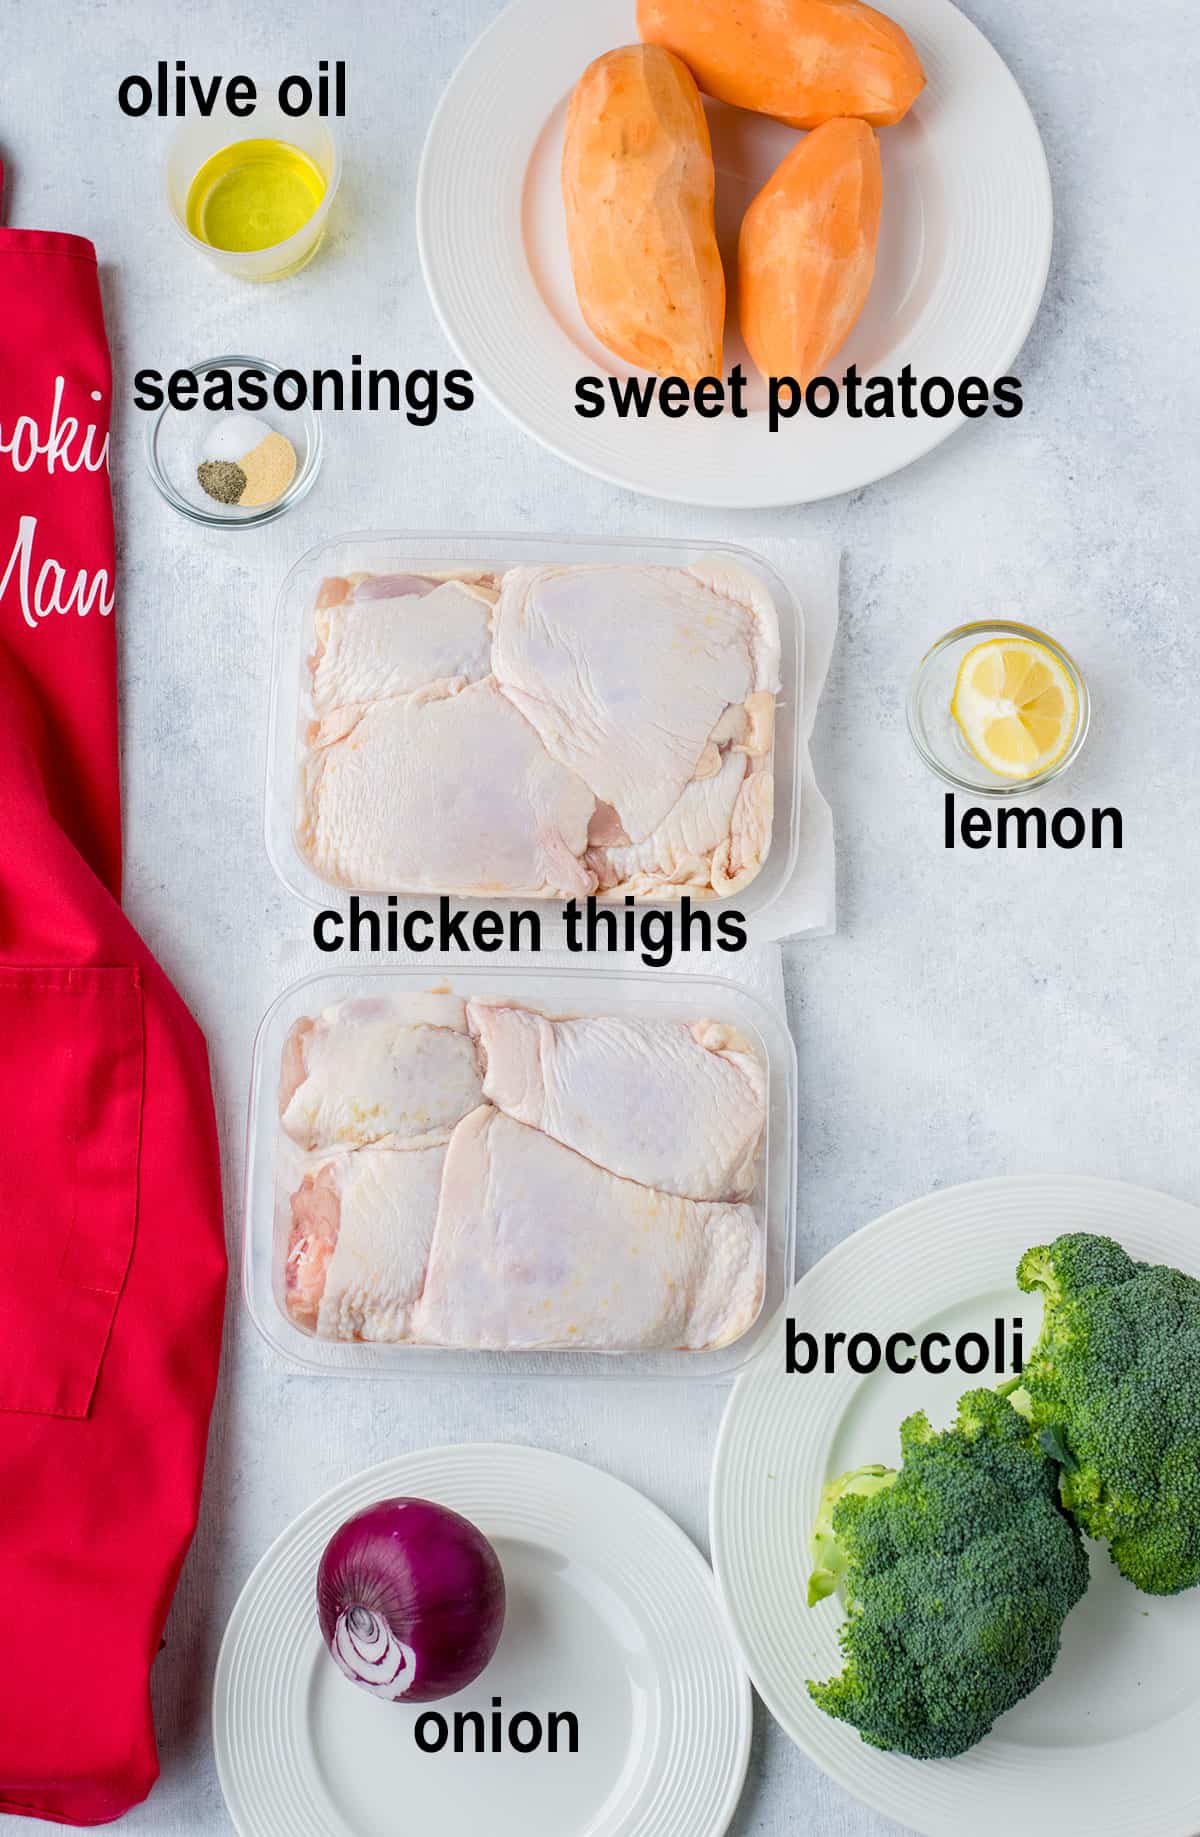 chicken, sweet potatoes, broccoli, oil, seasonings, lemon